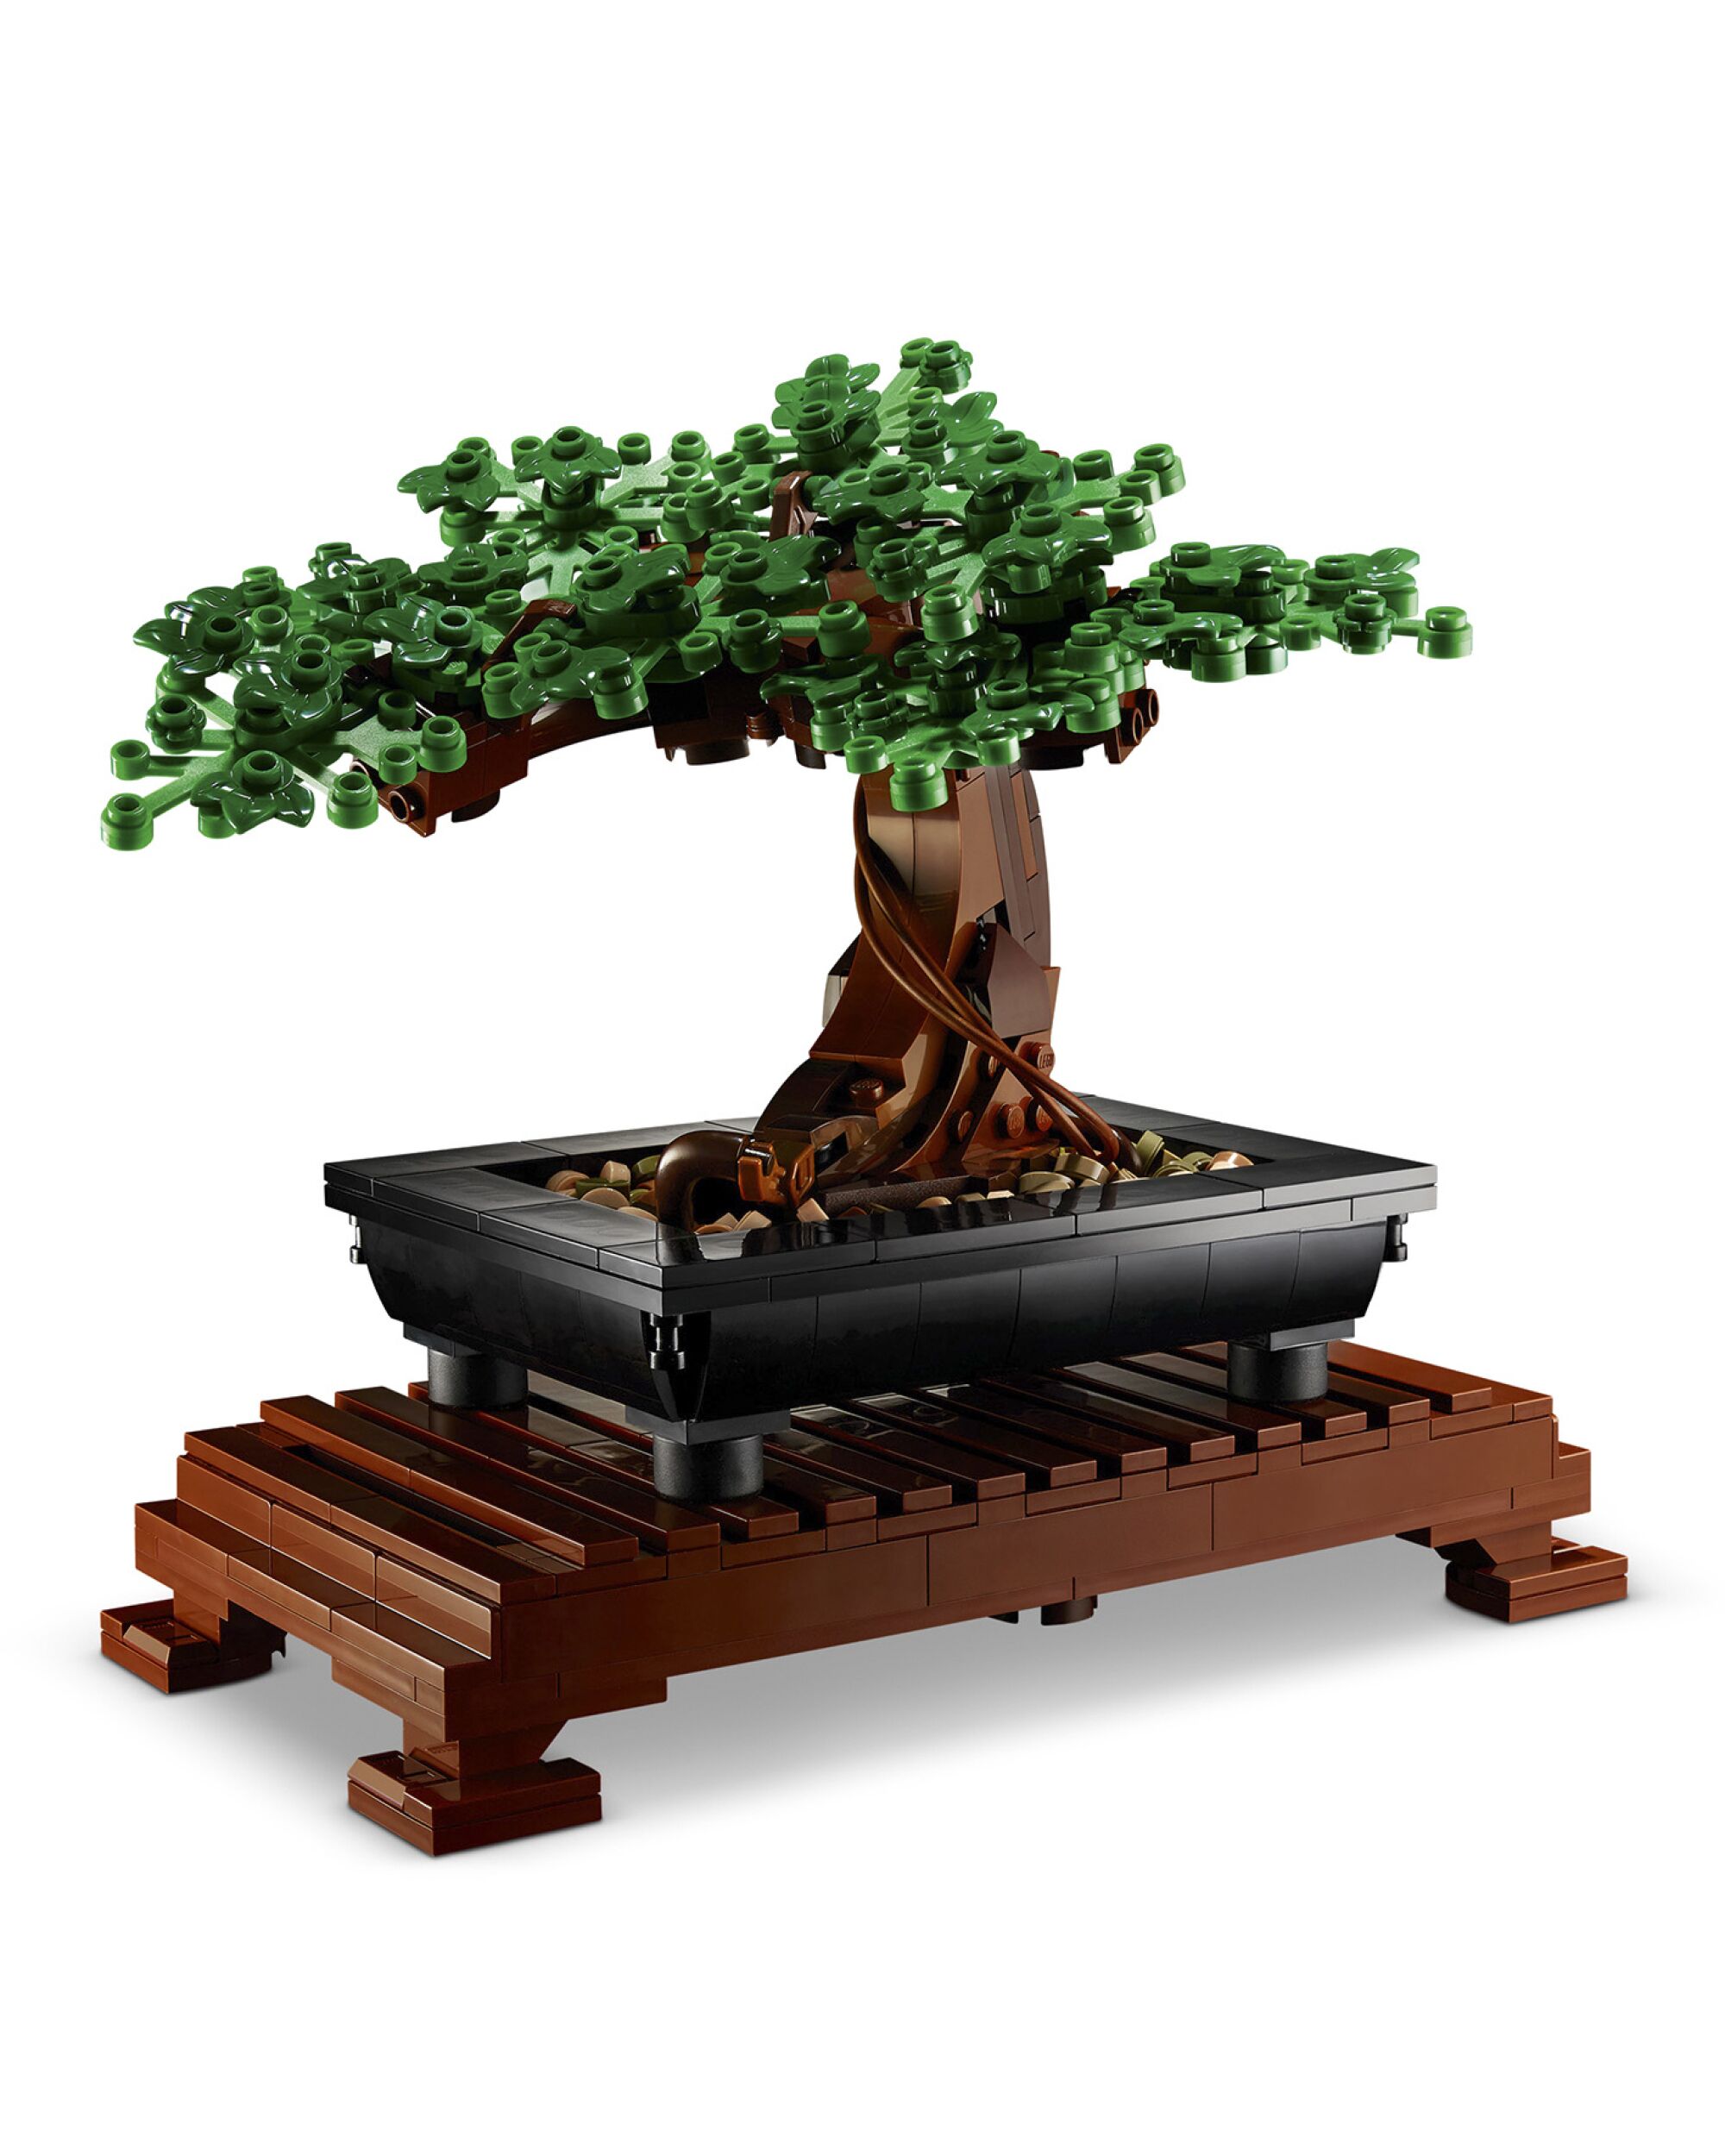 A Lego Bonsai tree